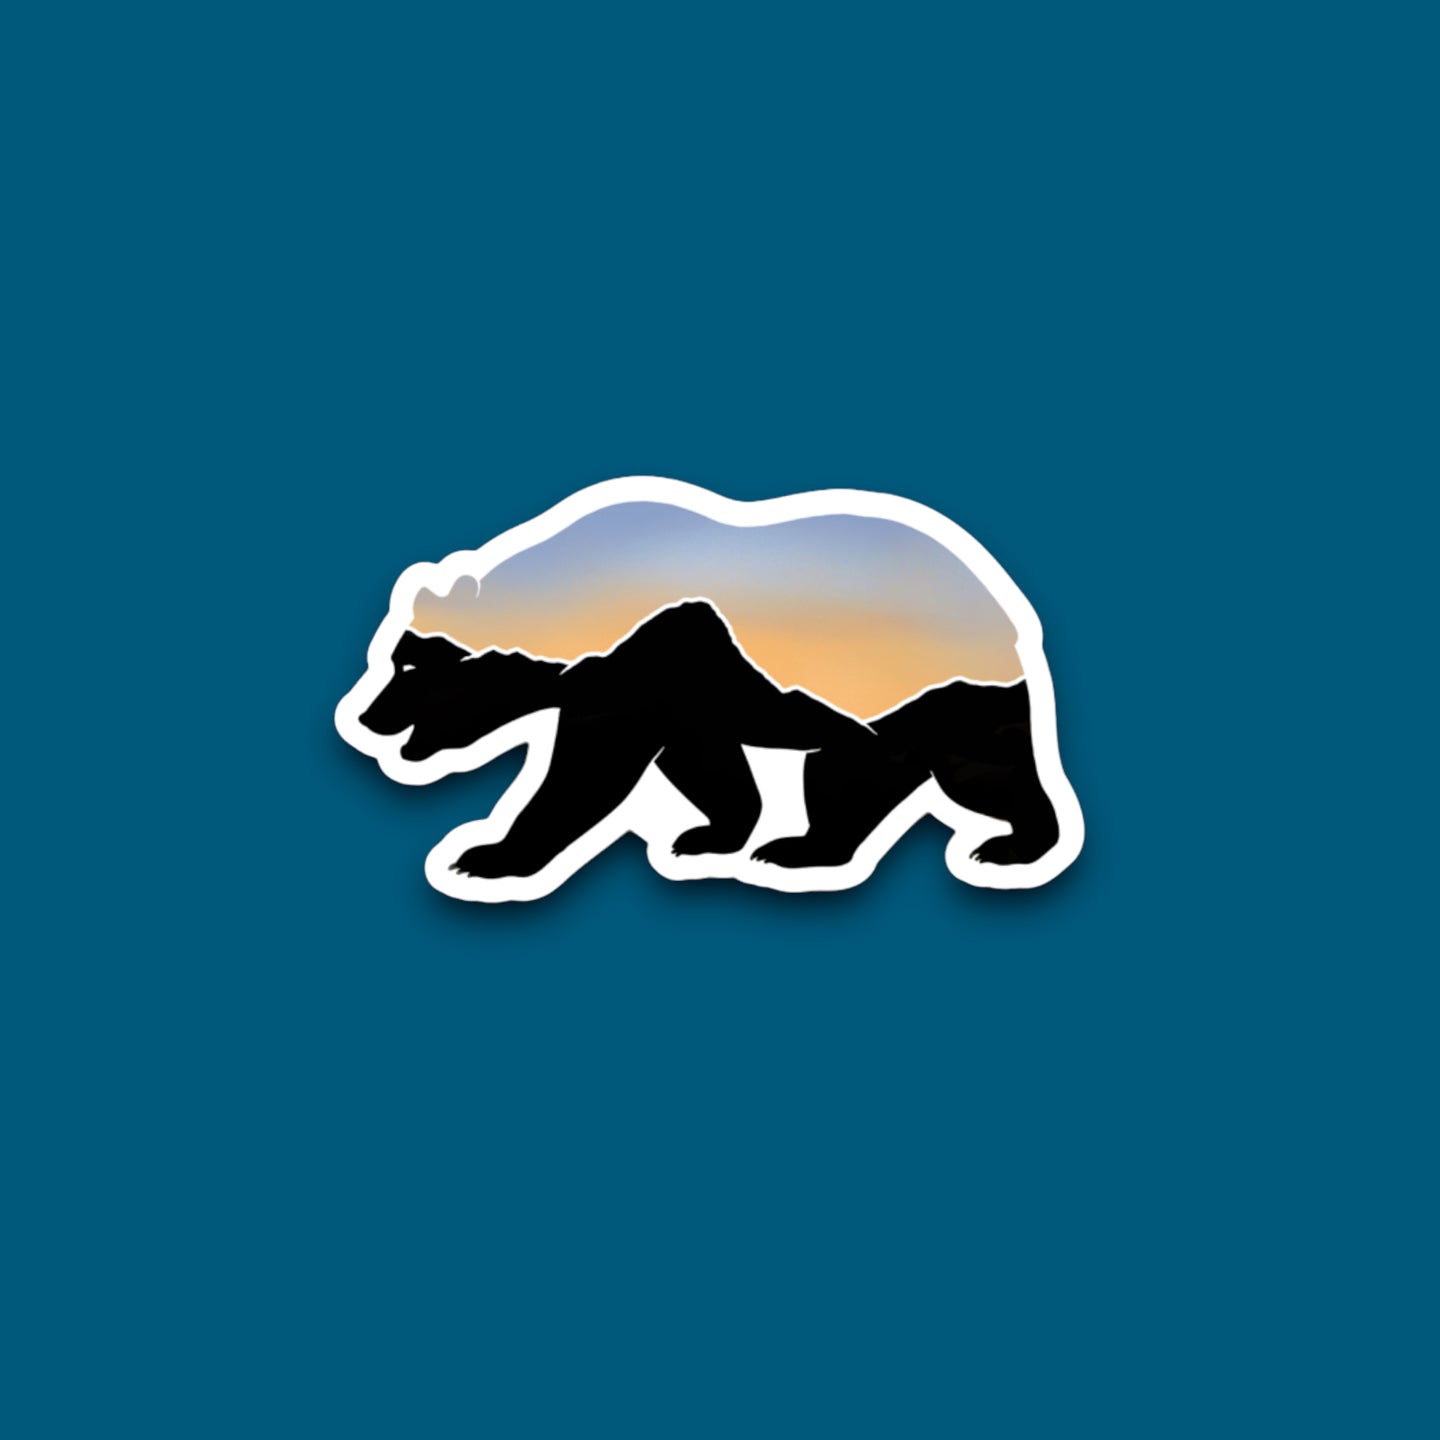 Grizzly Bear Glacier National Park Sticker (M2)